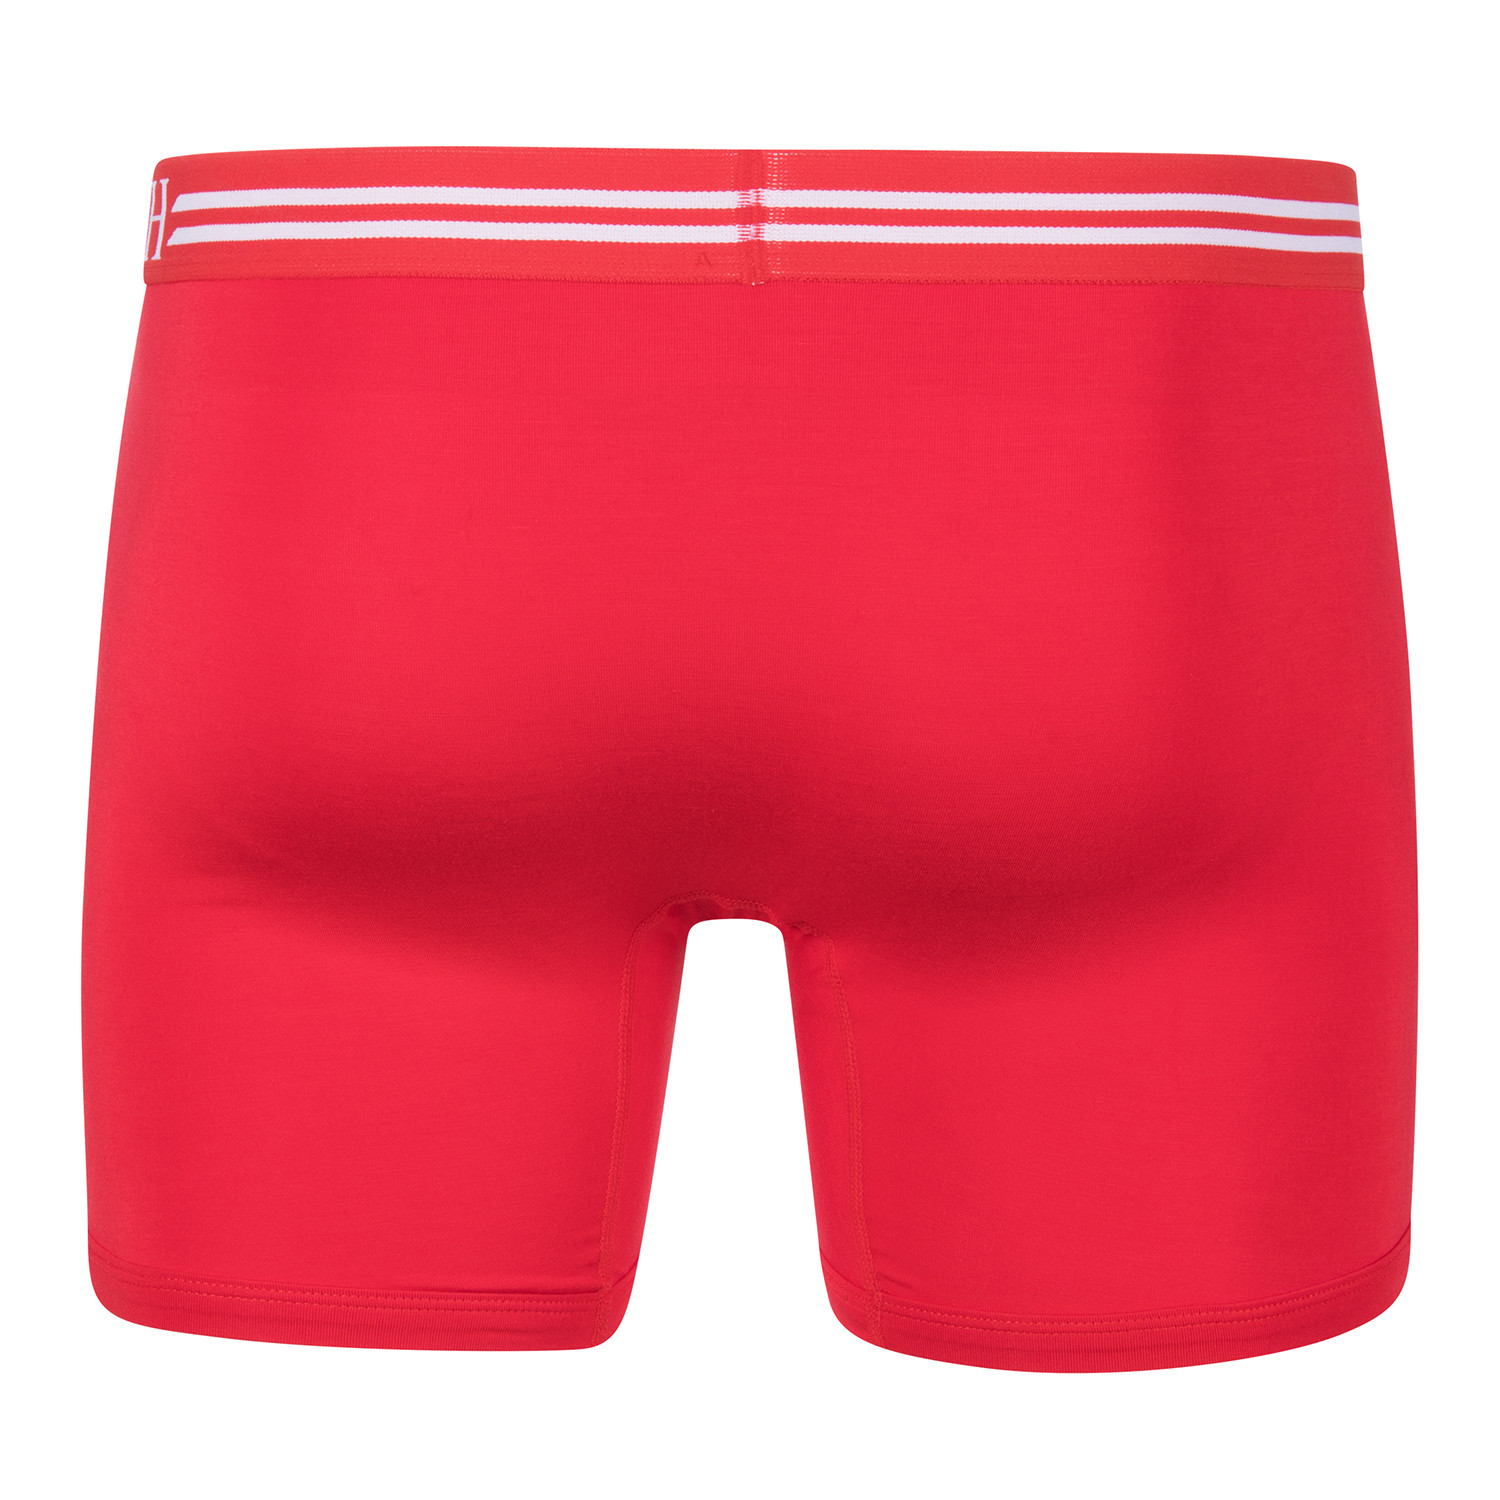 SHEATH 4.0 Men's Dual Pouch Boxer Brief // Red (Large) - Sheath